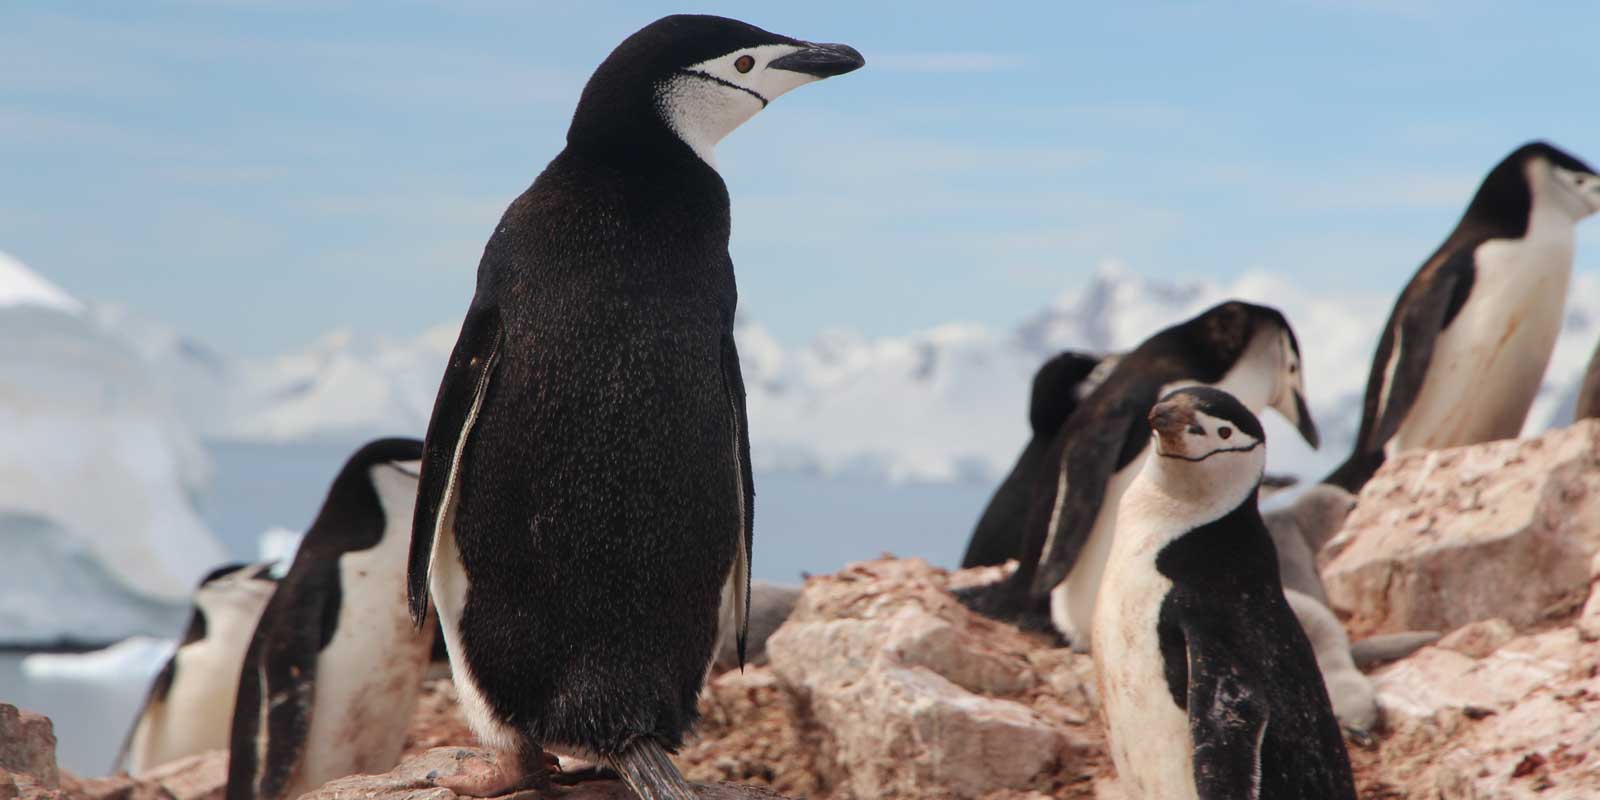 Close up photo of penguins in Antarctica